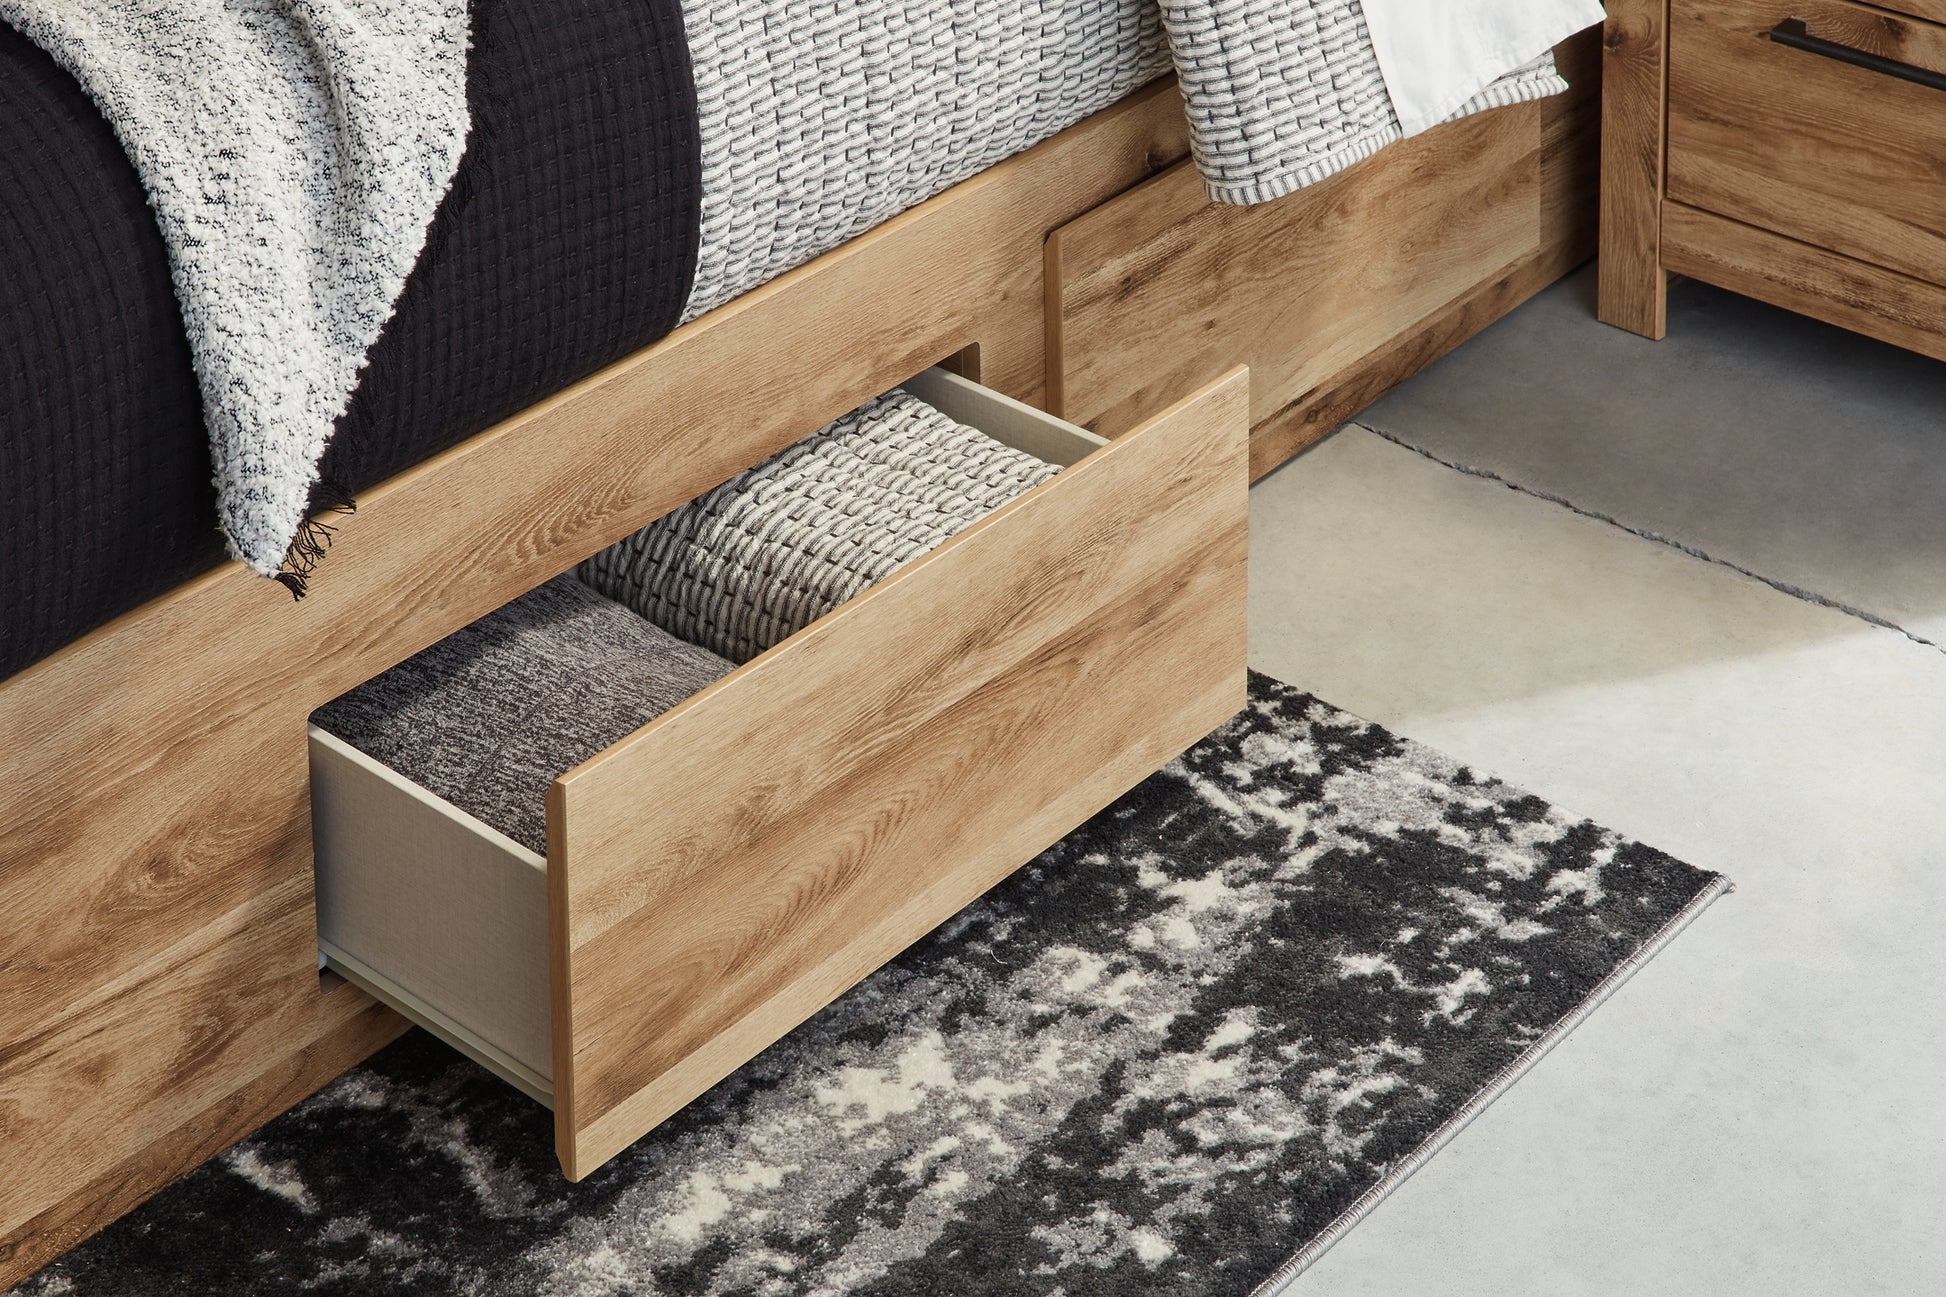 Hyanna Queen Panel Storage Bed with 1 Under Bed Storage Drawer Signature Design by Ashley®